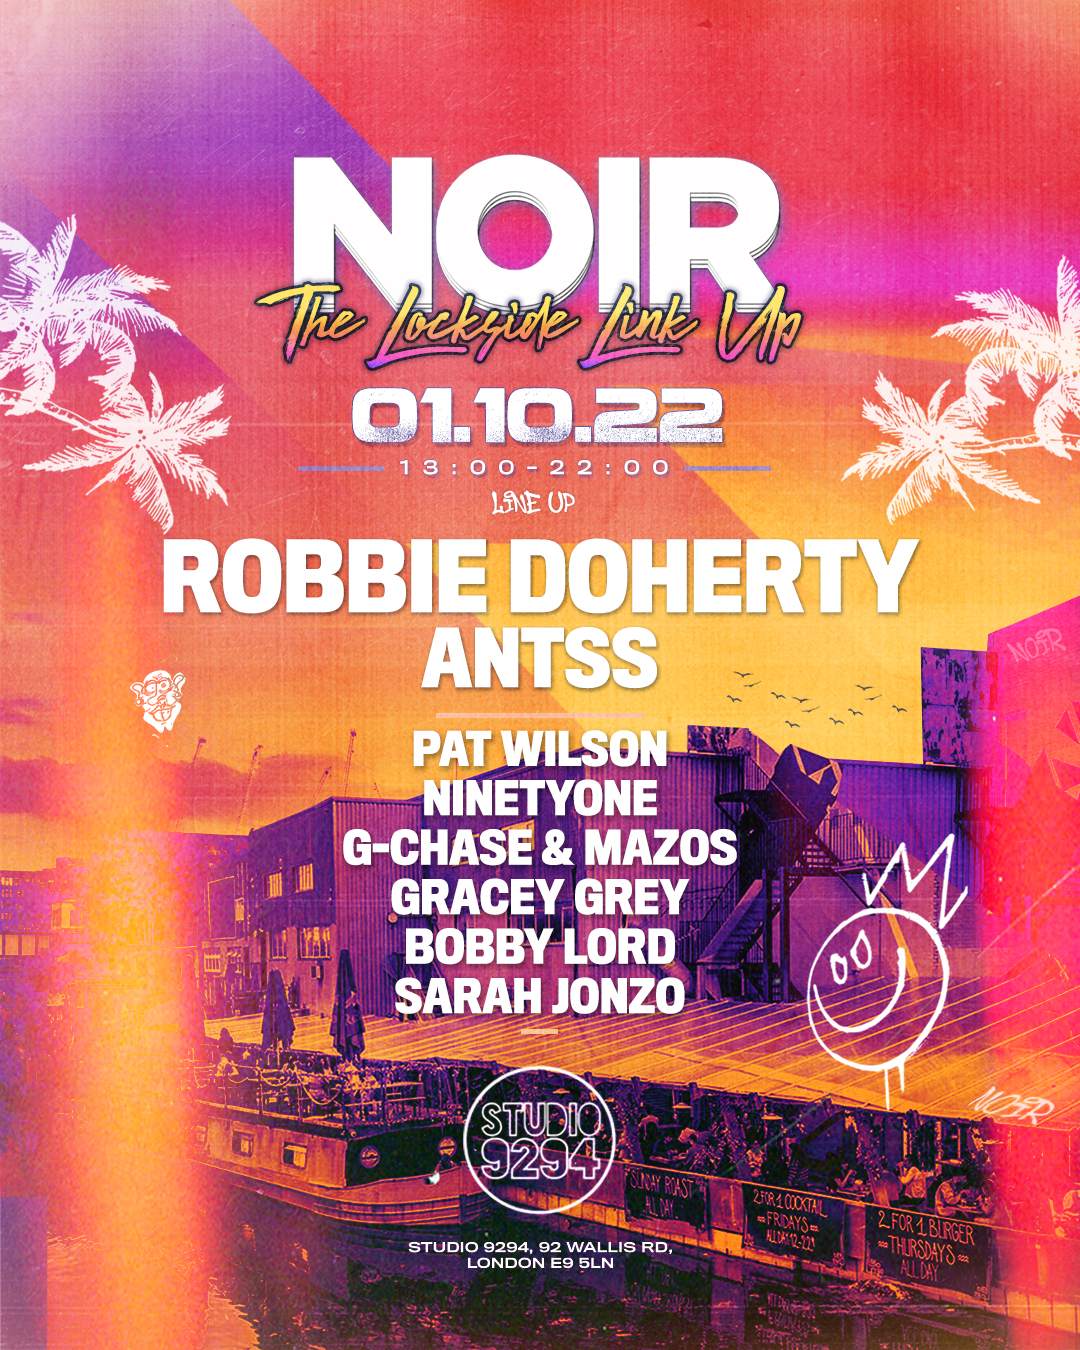 NOIR presents: The Lock-side Link Up w/Robbie Doherty, Antss, Pat Wilson  - フライヤー裏